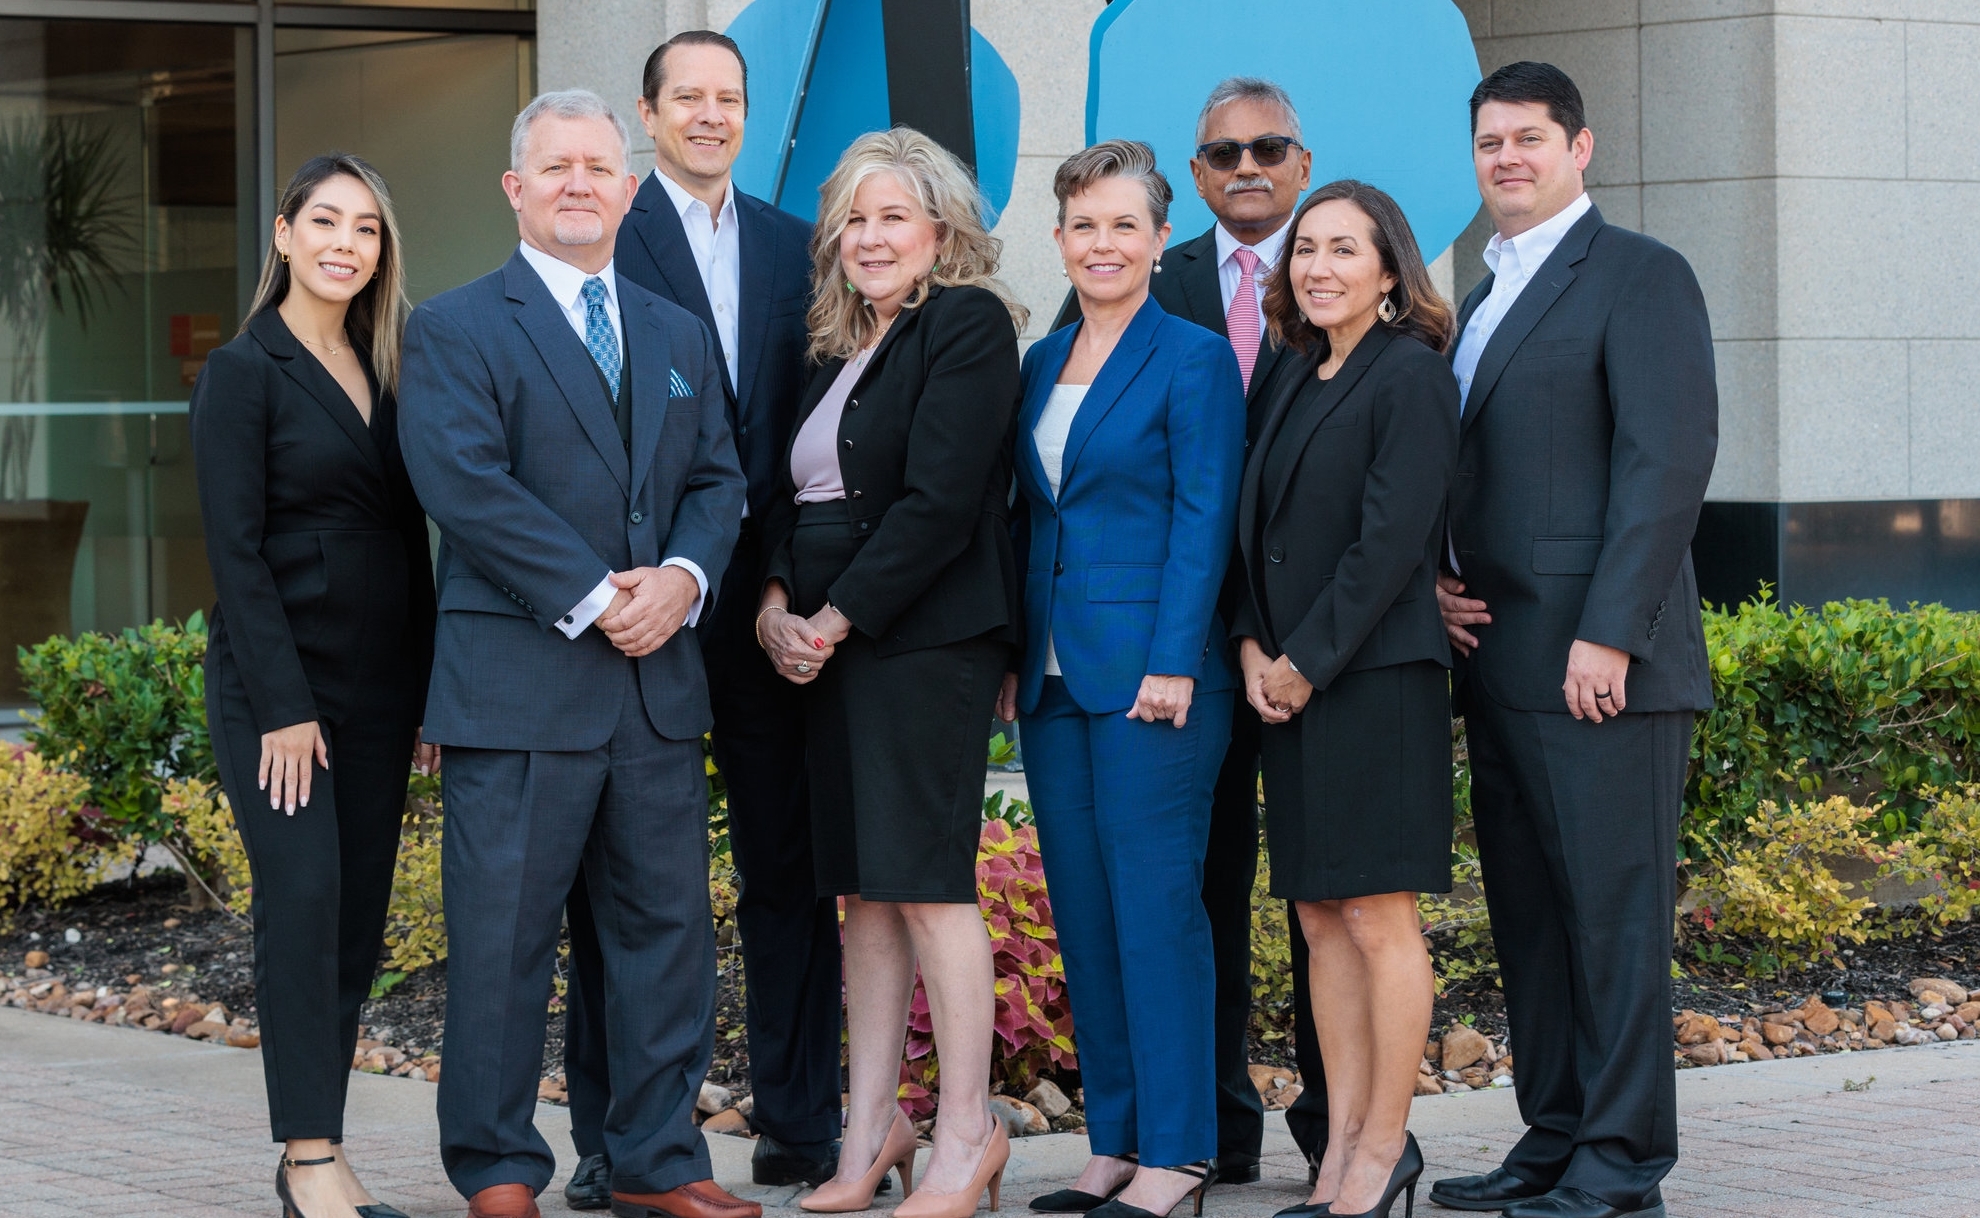 Group photo of the Sugar Creek Wealth Managment Team